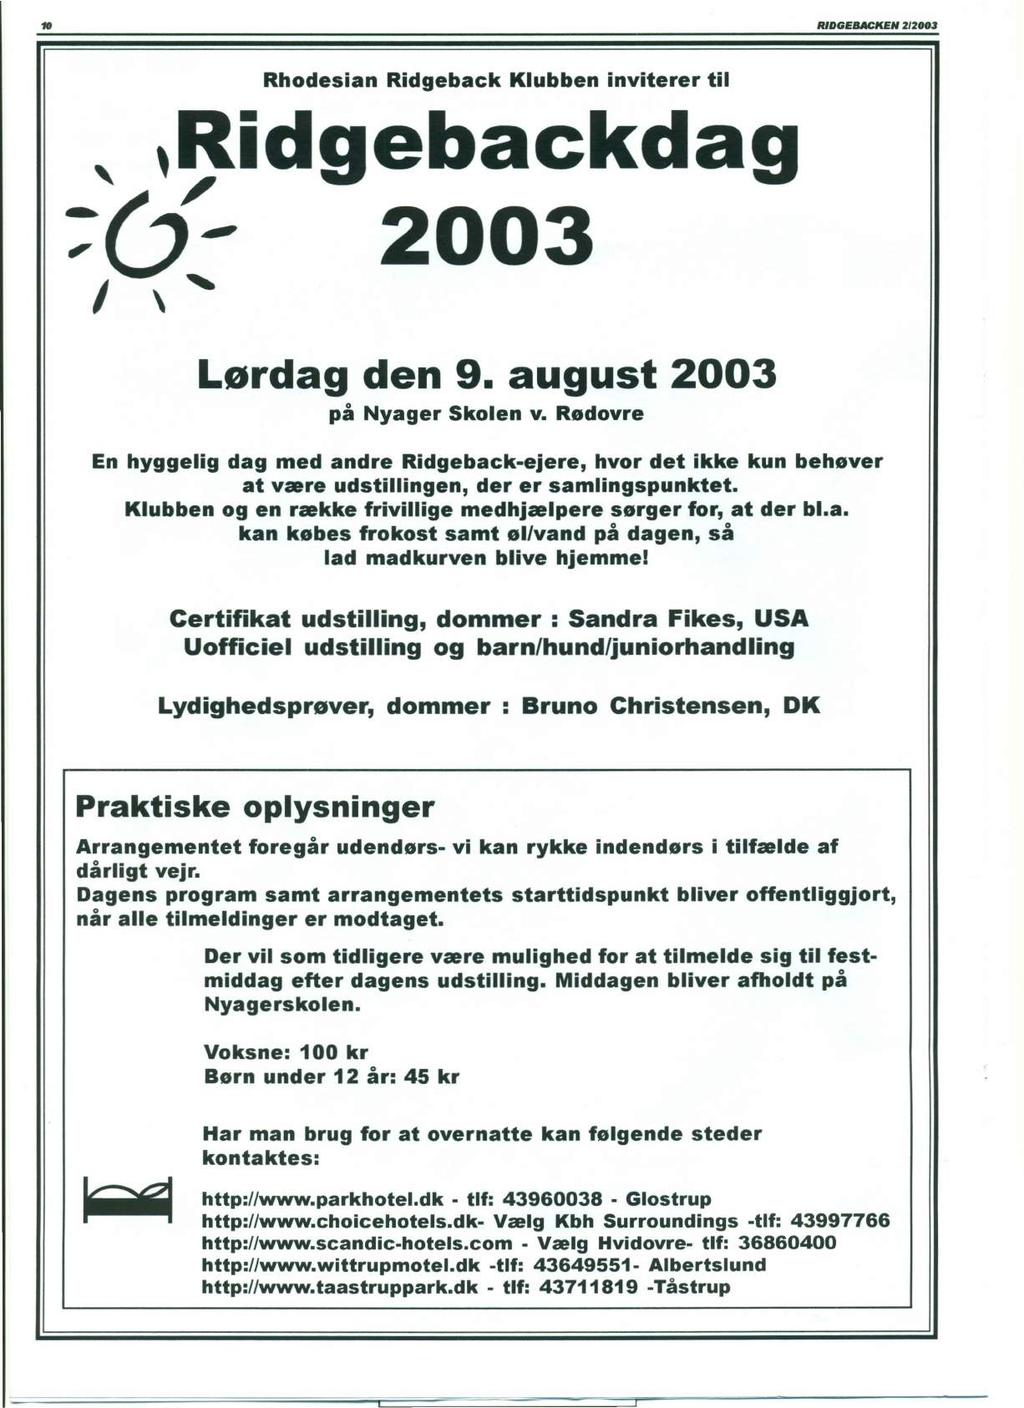 10 RIDGEBACKEN 2/2003 Rhodesian Ridgeback Klubben inviterer til,,ridgebackdag ;(:f- 2003 I " Lørdag den 9. august 2003 på Nyager Skolen v.